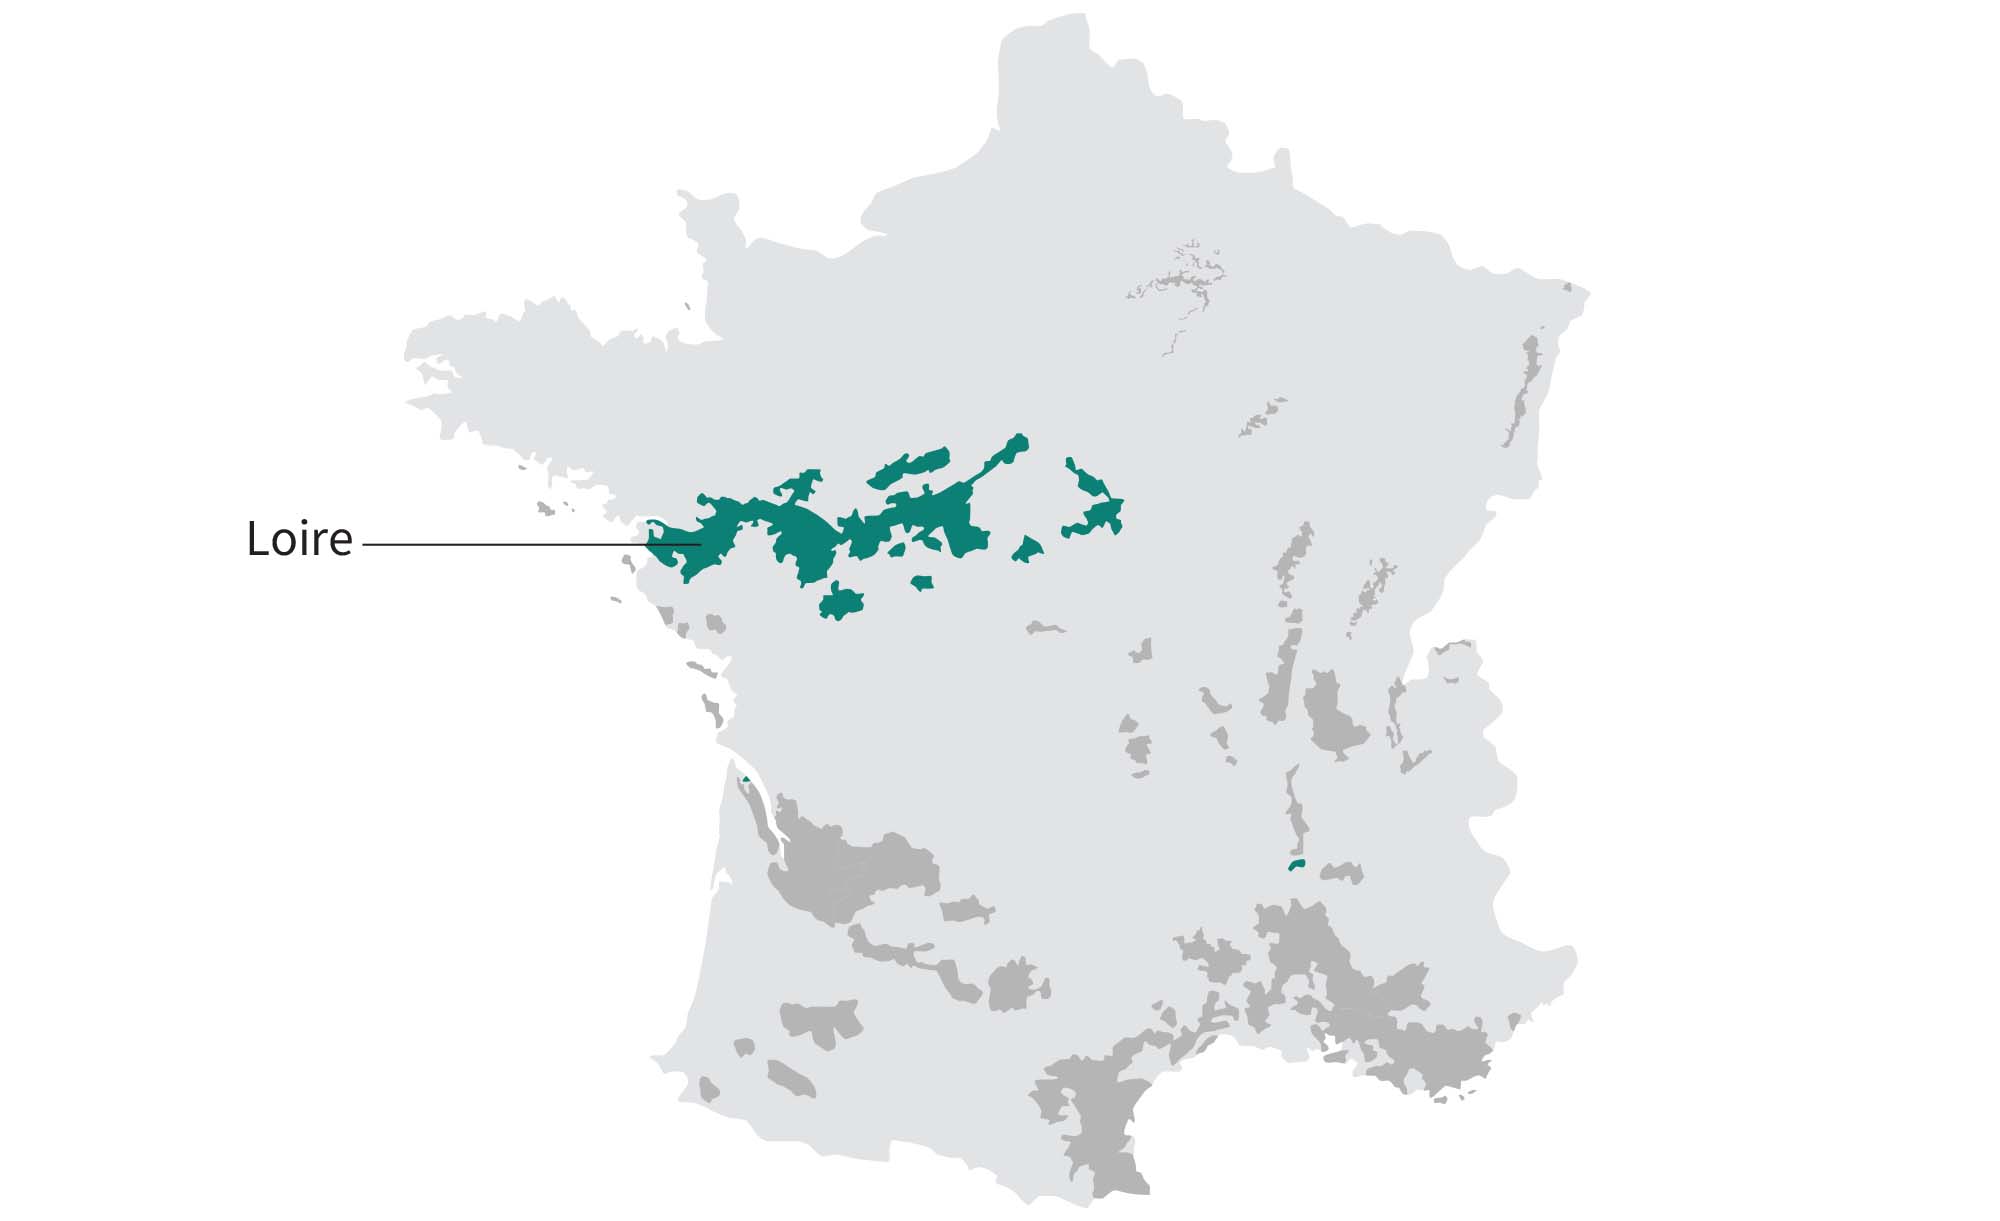 map of chenin blanc winegrowing regions in France: Loire Valley